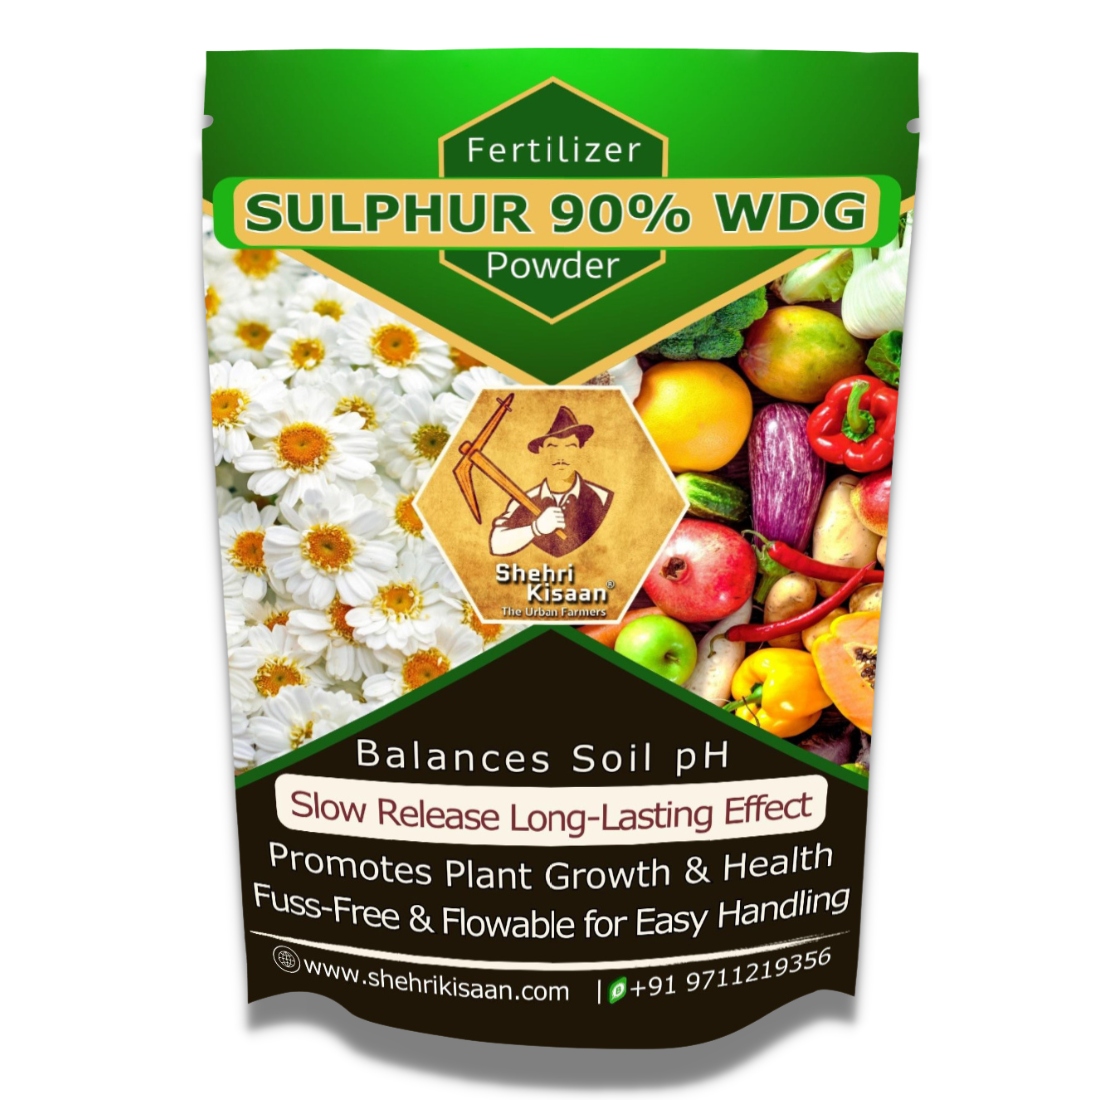 Sulphur 90% WDG